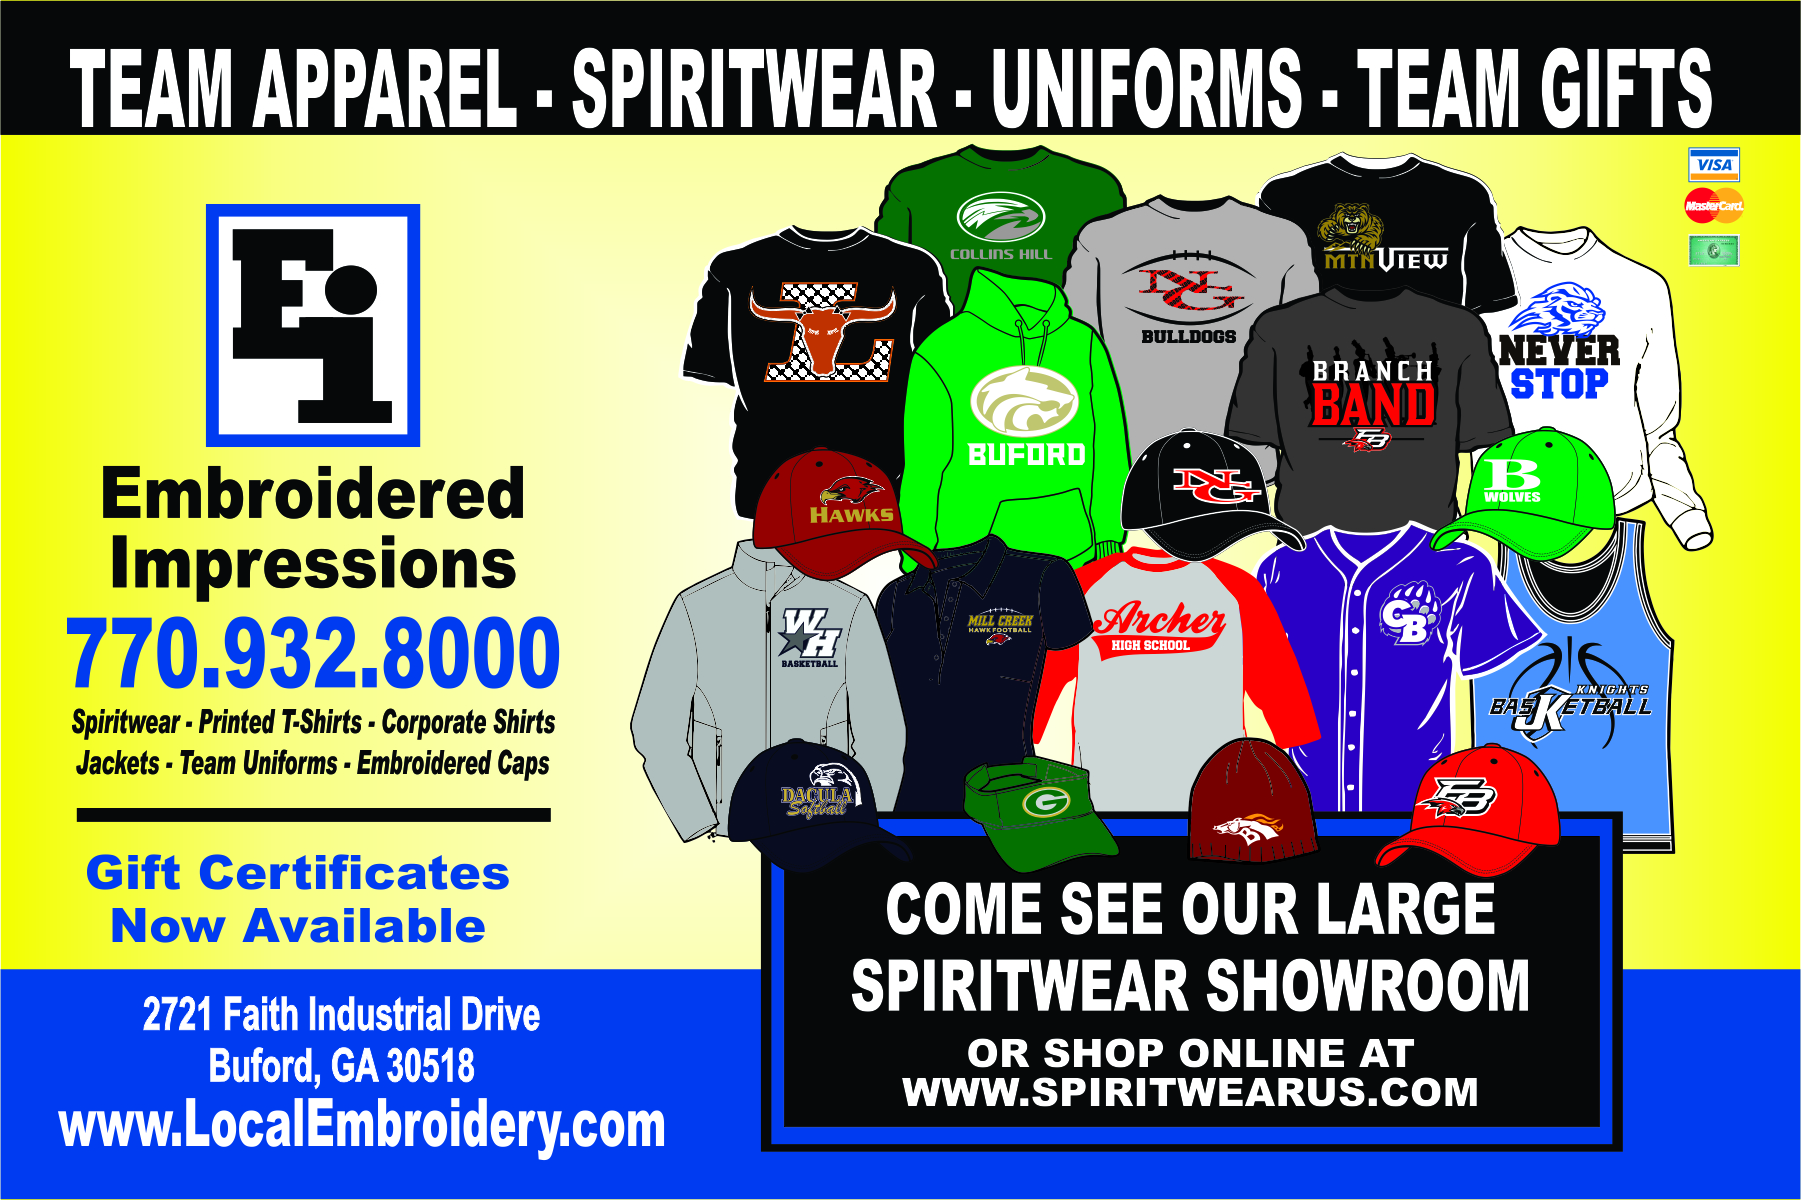 School Spiritwear and Uniforms